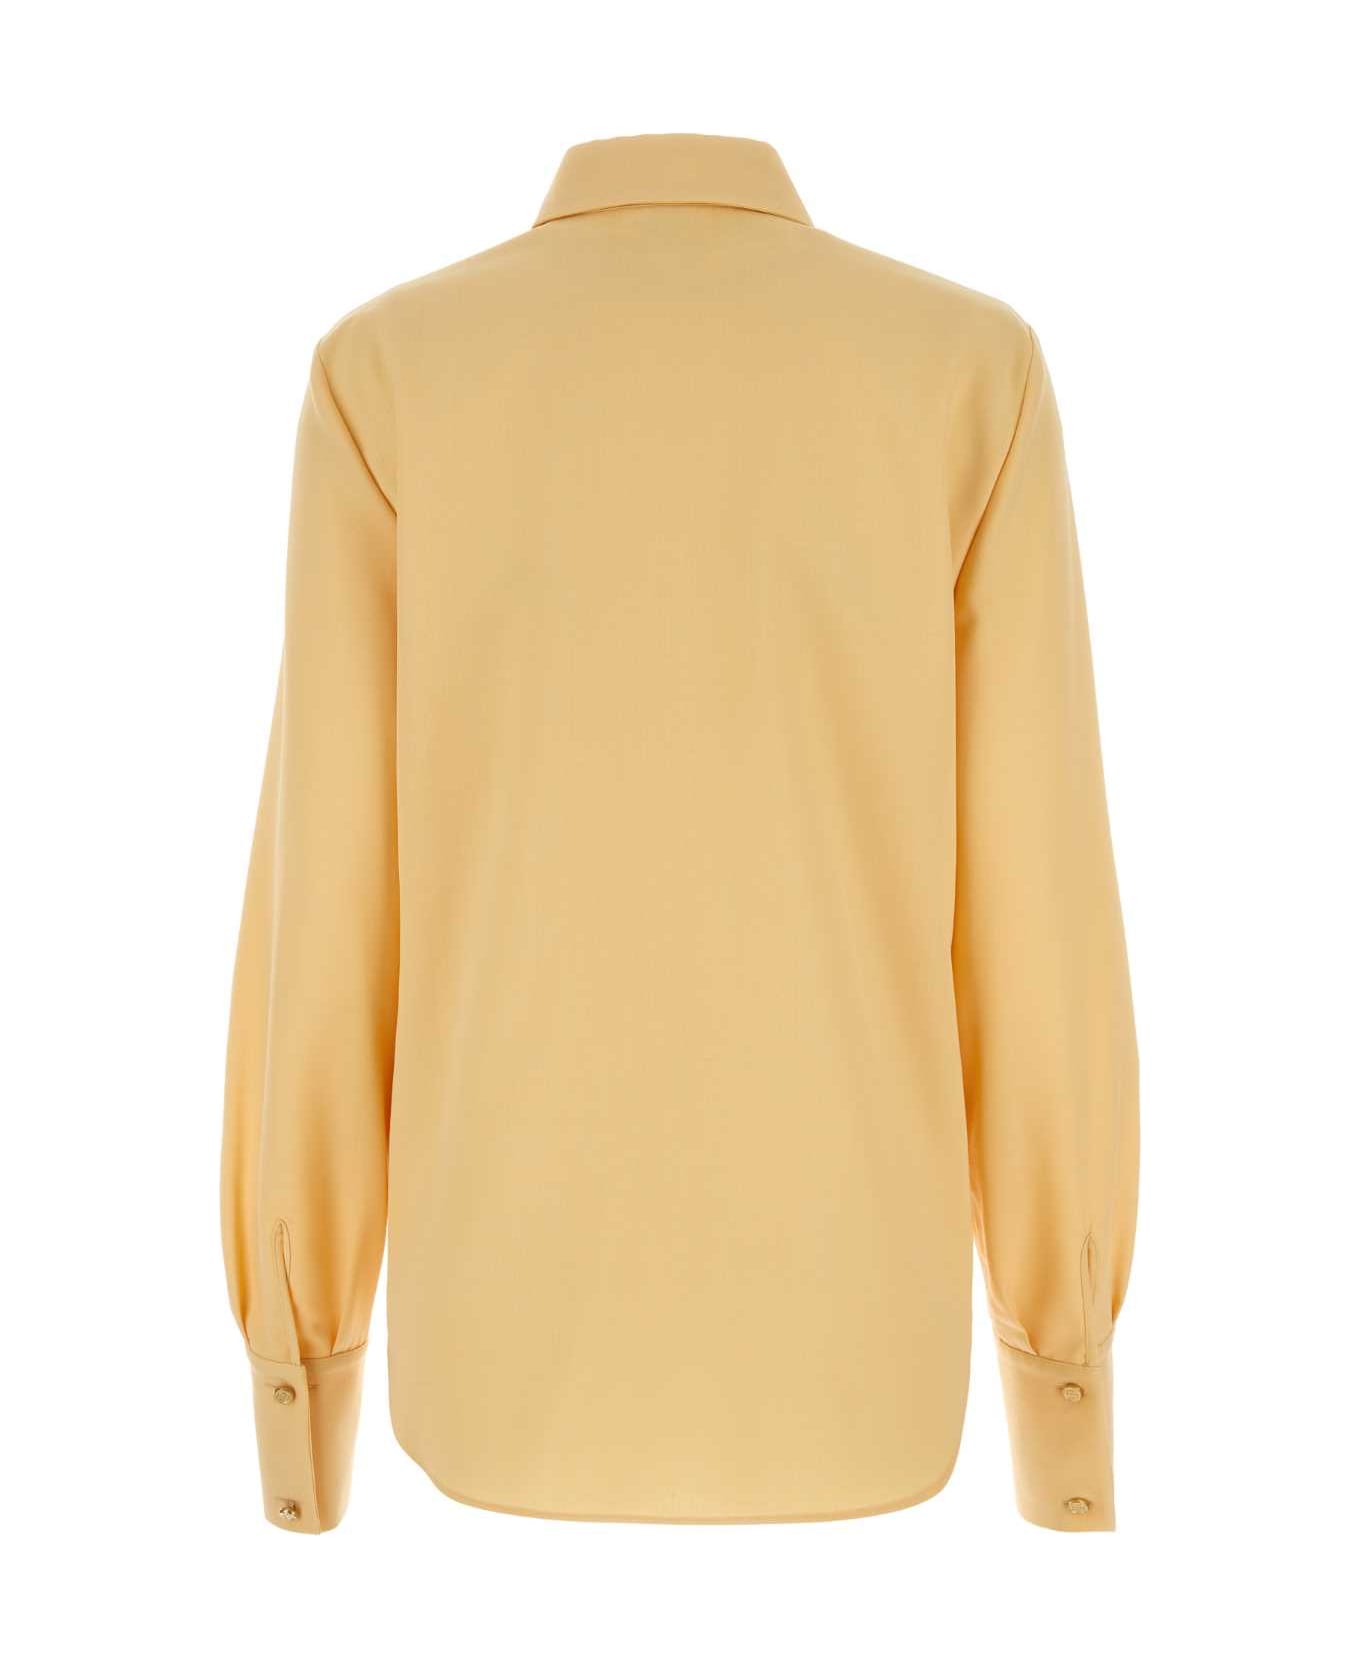 Bally Pastel Yellow Polyester Blend Shirt - CREAM50